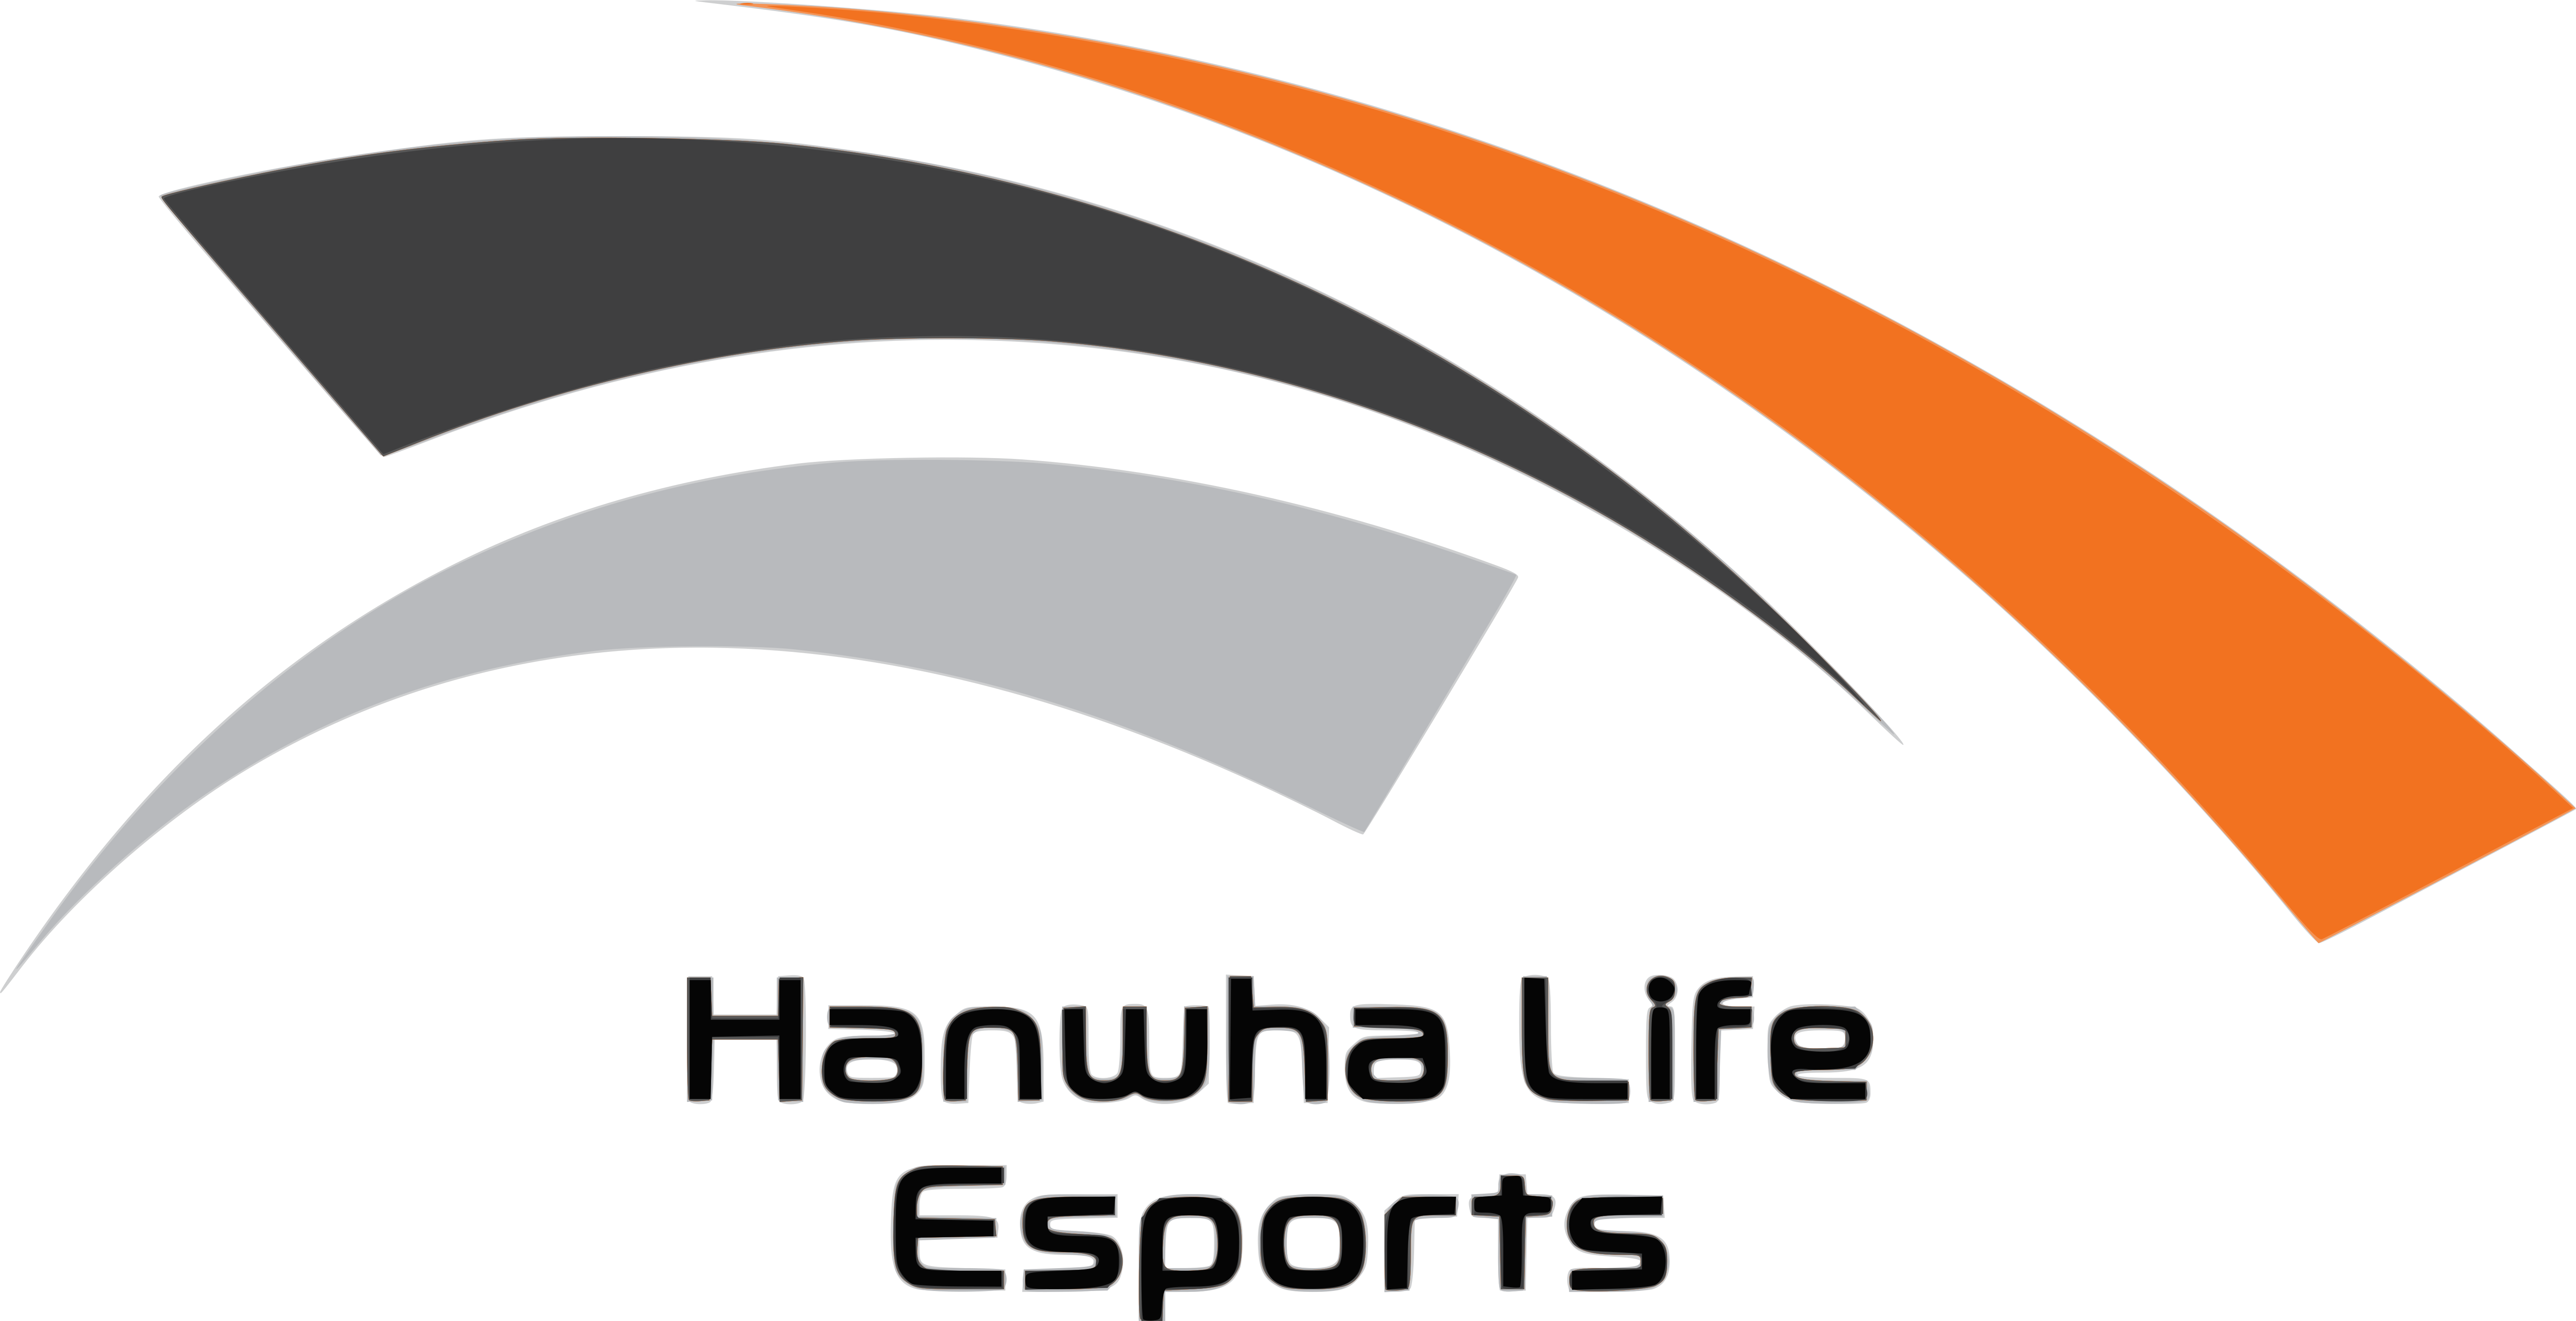 hanwha life esports logo